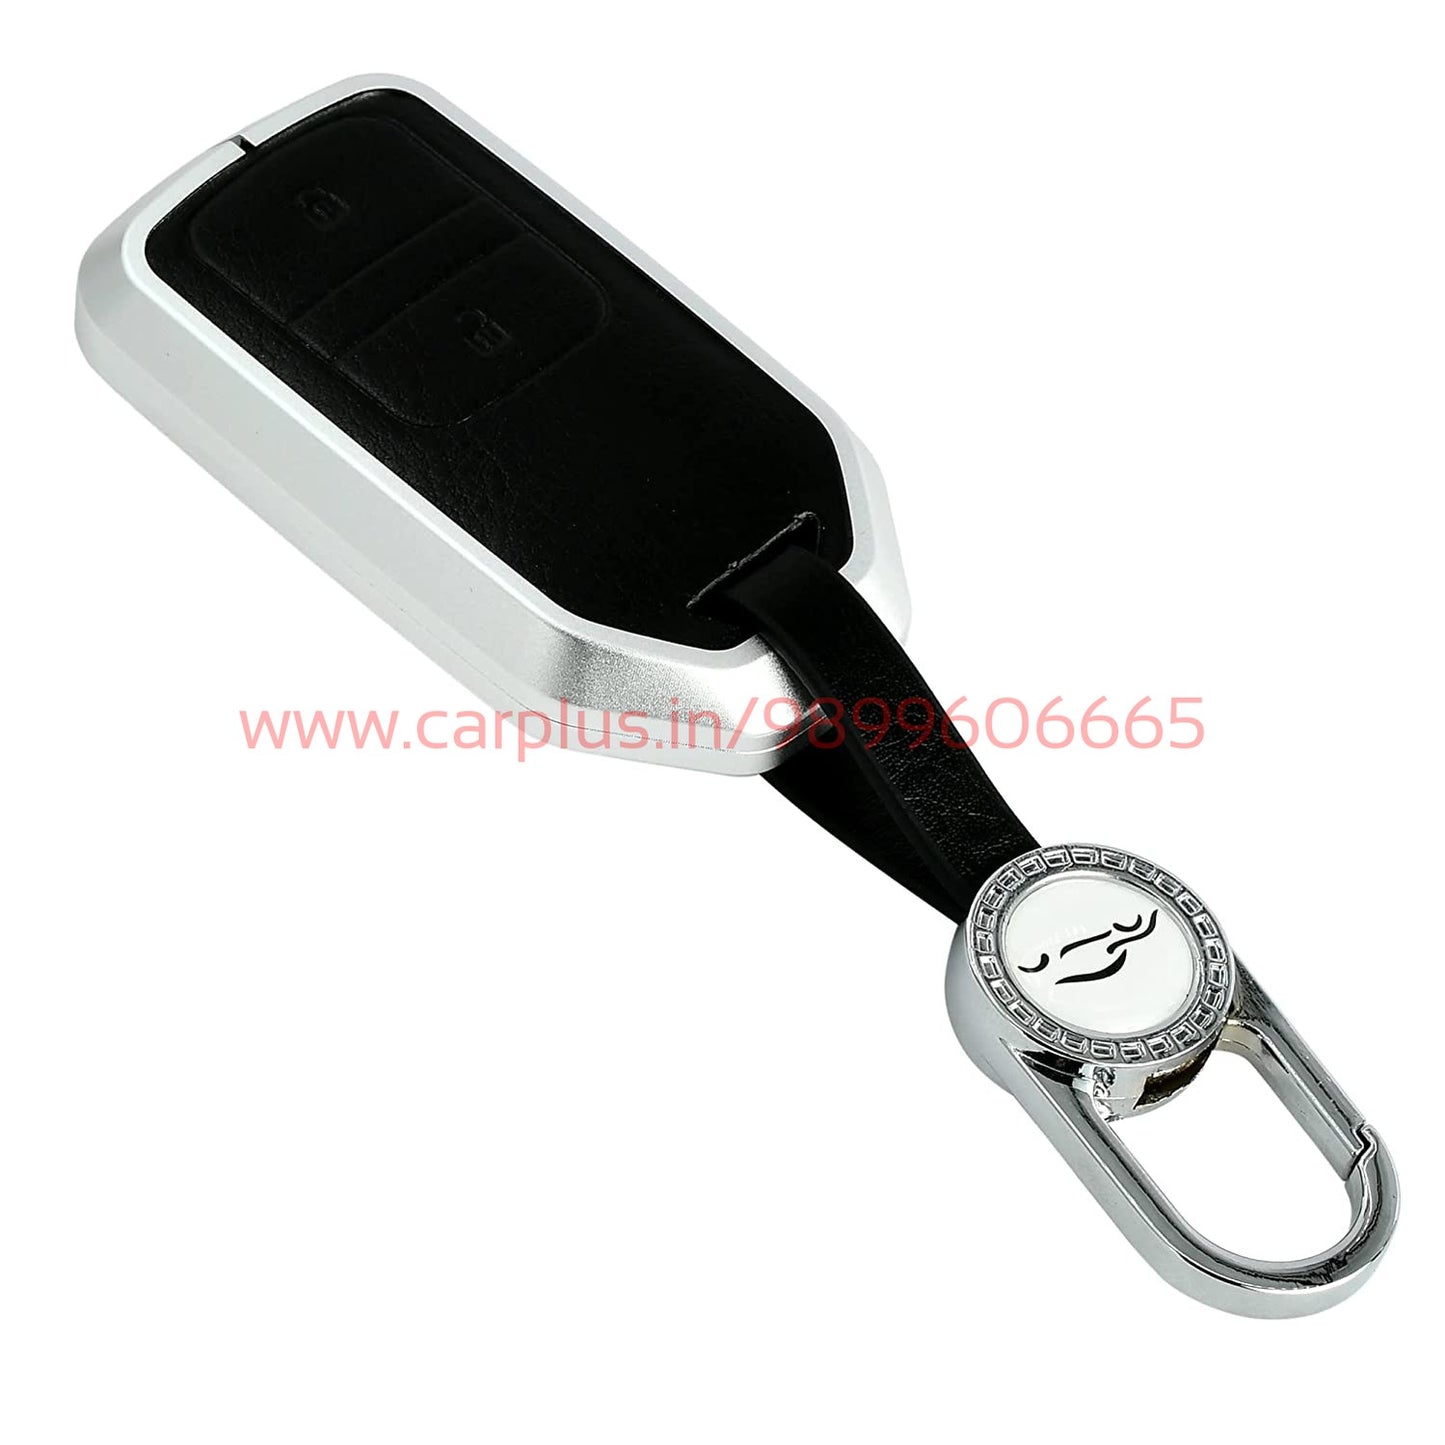 
                  
                    KMH Aluminium Alloy with Leather Car Key Cover Compatible for Honda BRV , WRV , CRV , Jazz , City 2 Button Smart Key-TPU ALUMINIUM KEY COVER-KMH-Silver Black-With Key Chain-CARPLUS
                  
                